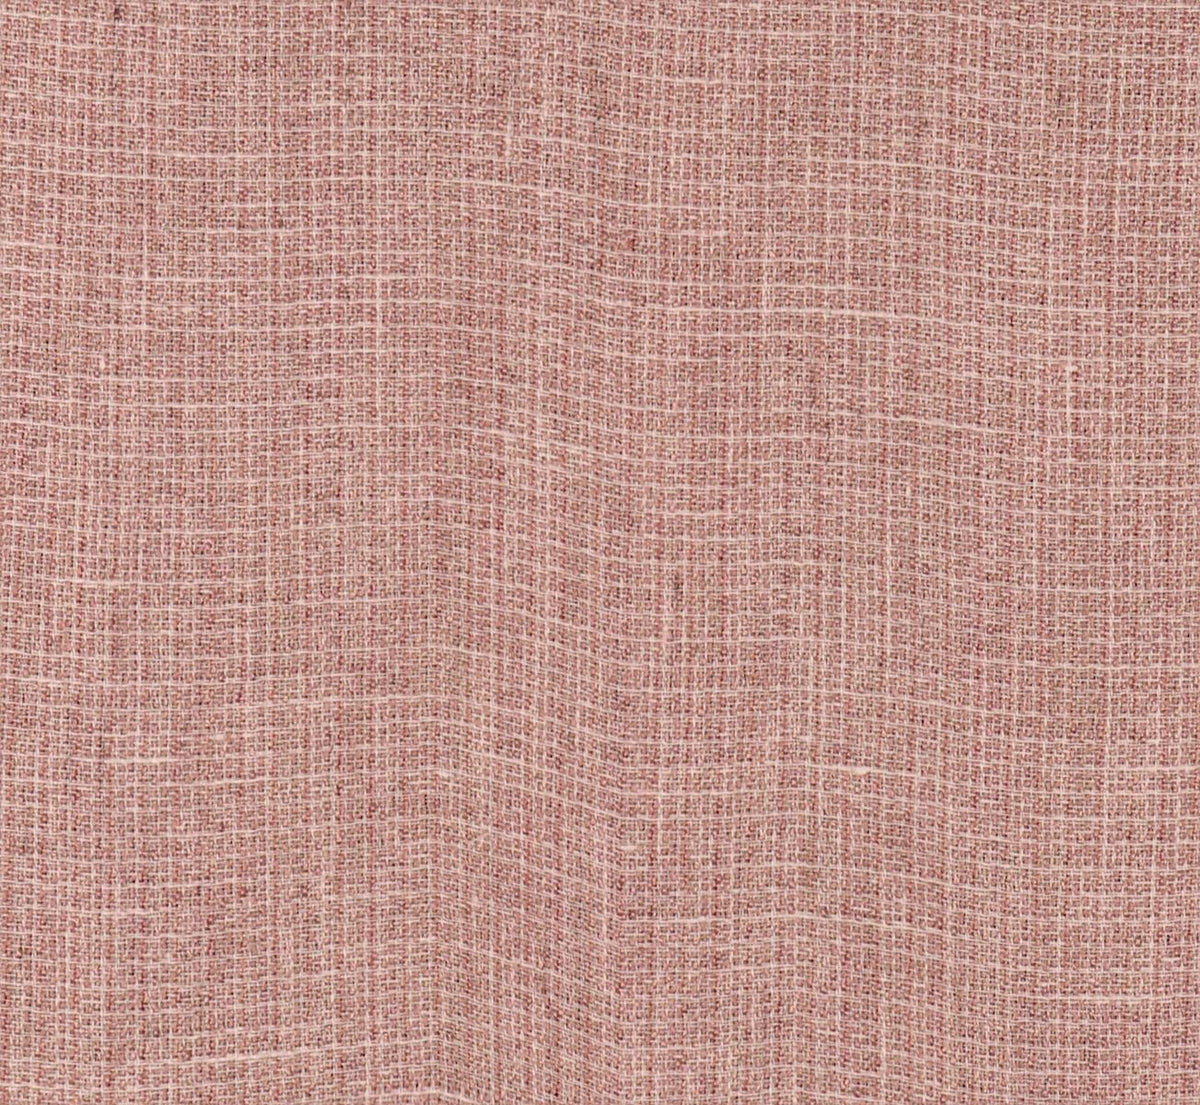 Night curtain pink Eleonor